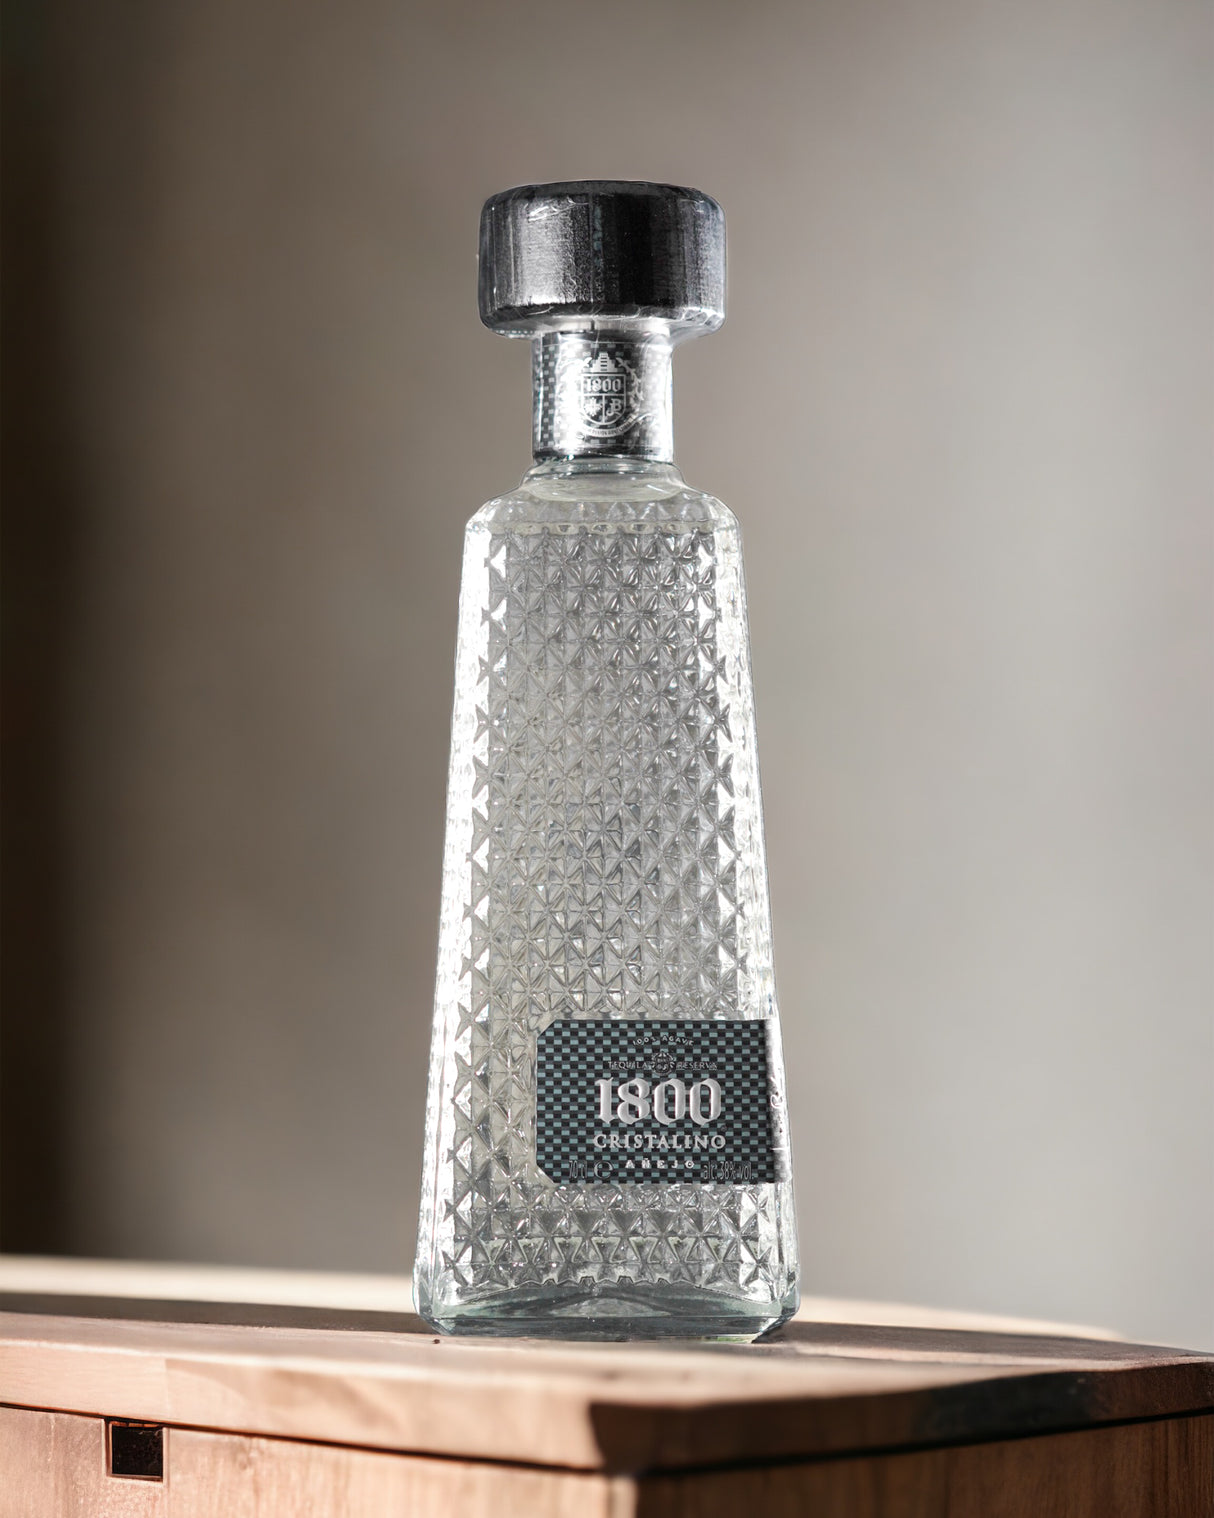 Jose Cuervo Tequila 1800 Cristalino